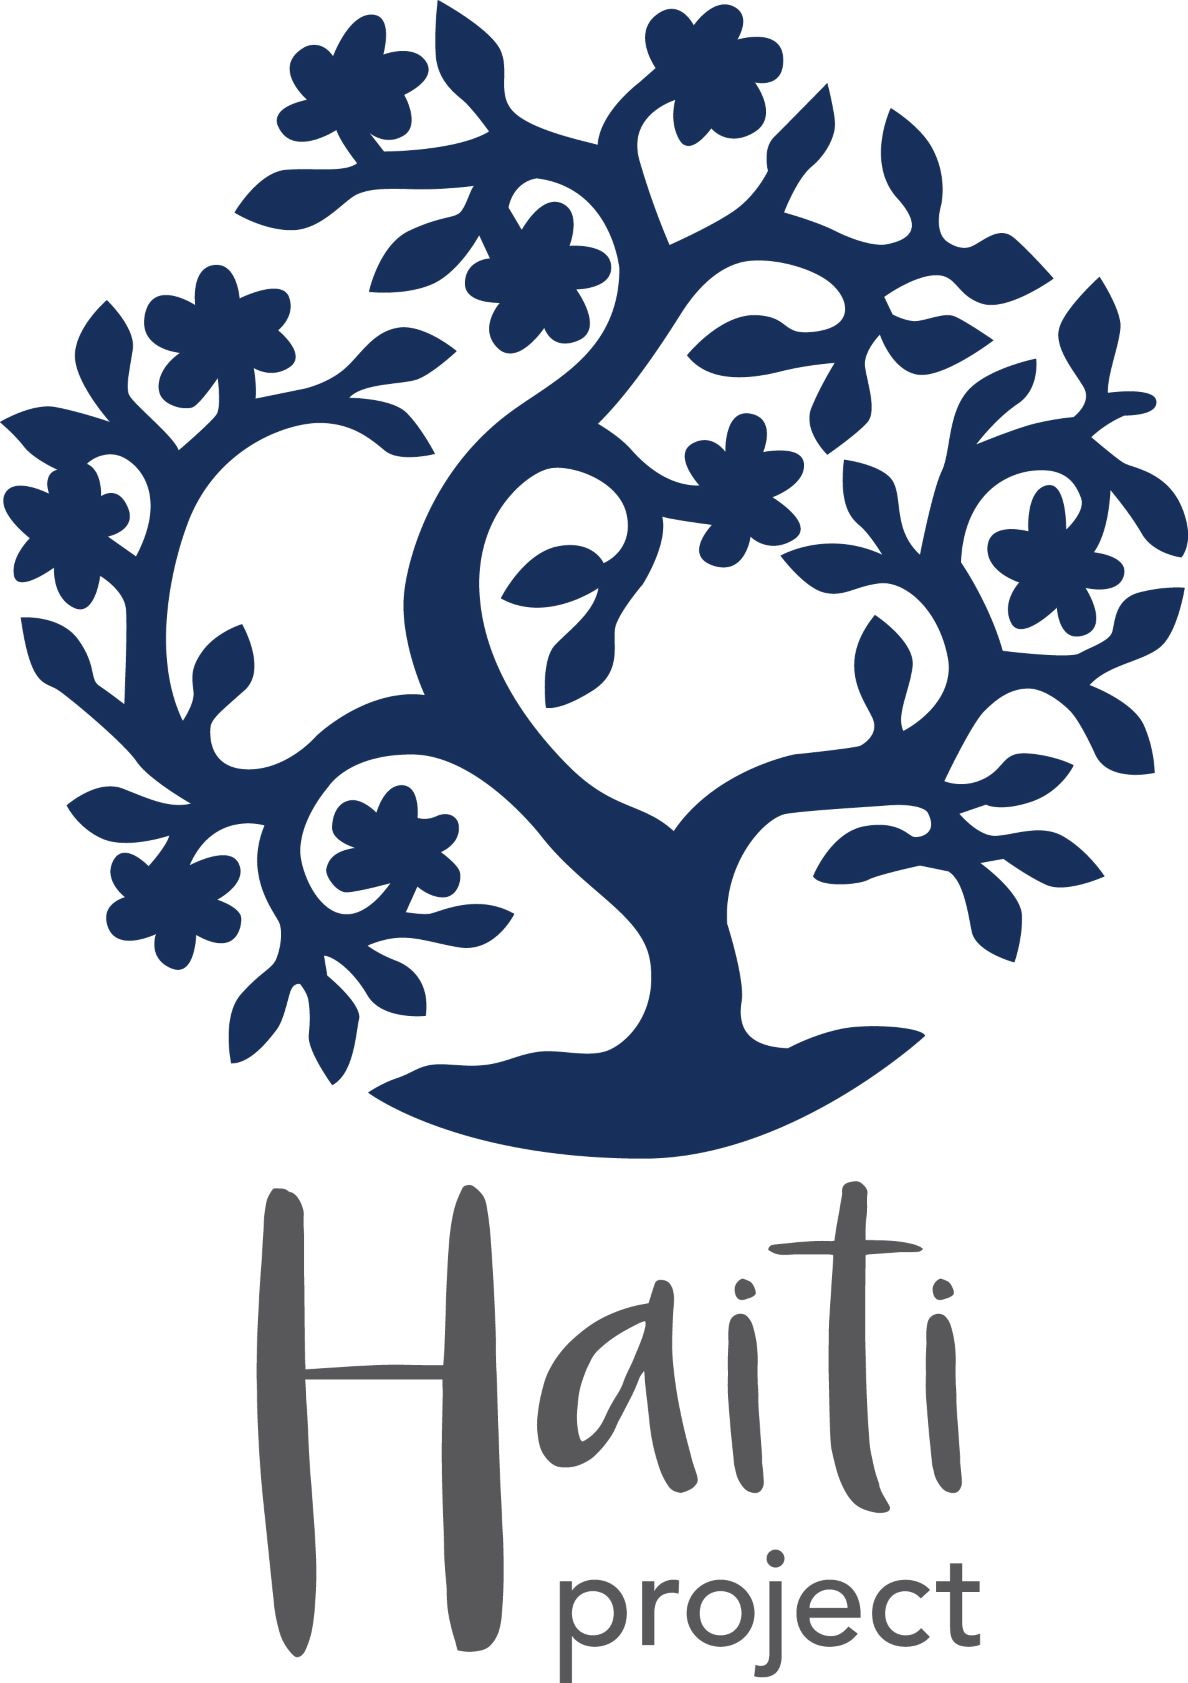 The Haiti Project logo